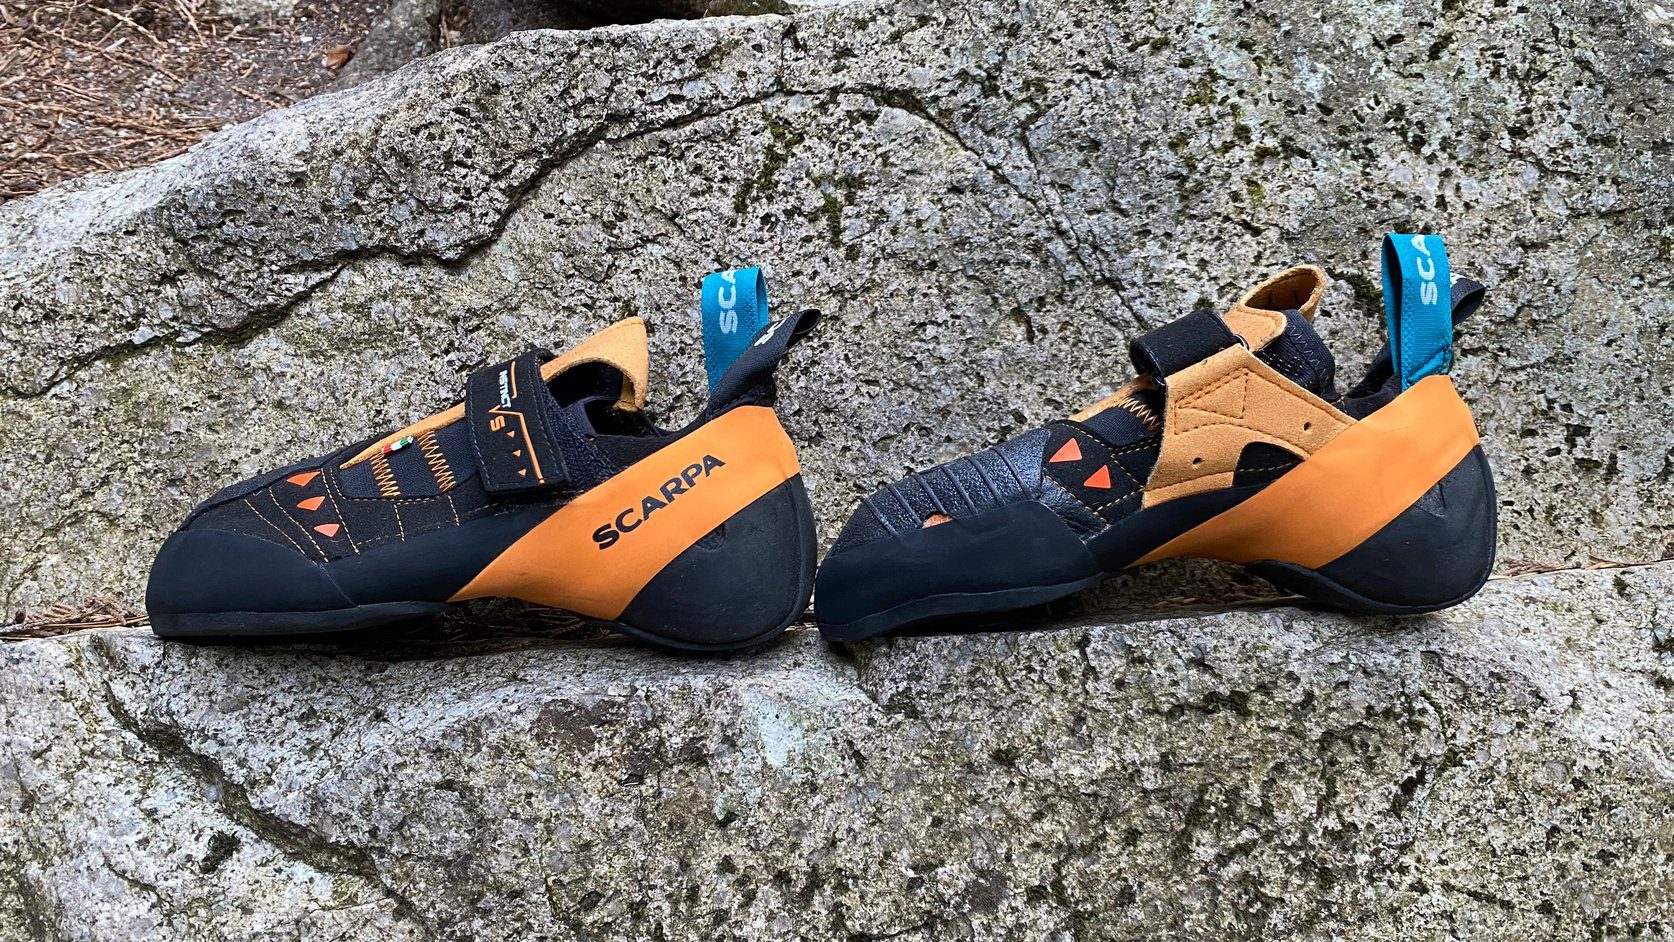 SCARPA Instinct VS climbing shoes